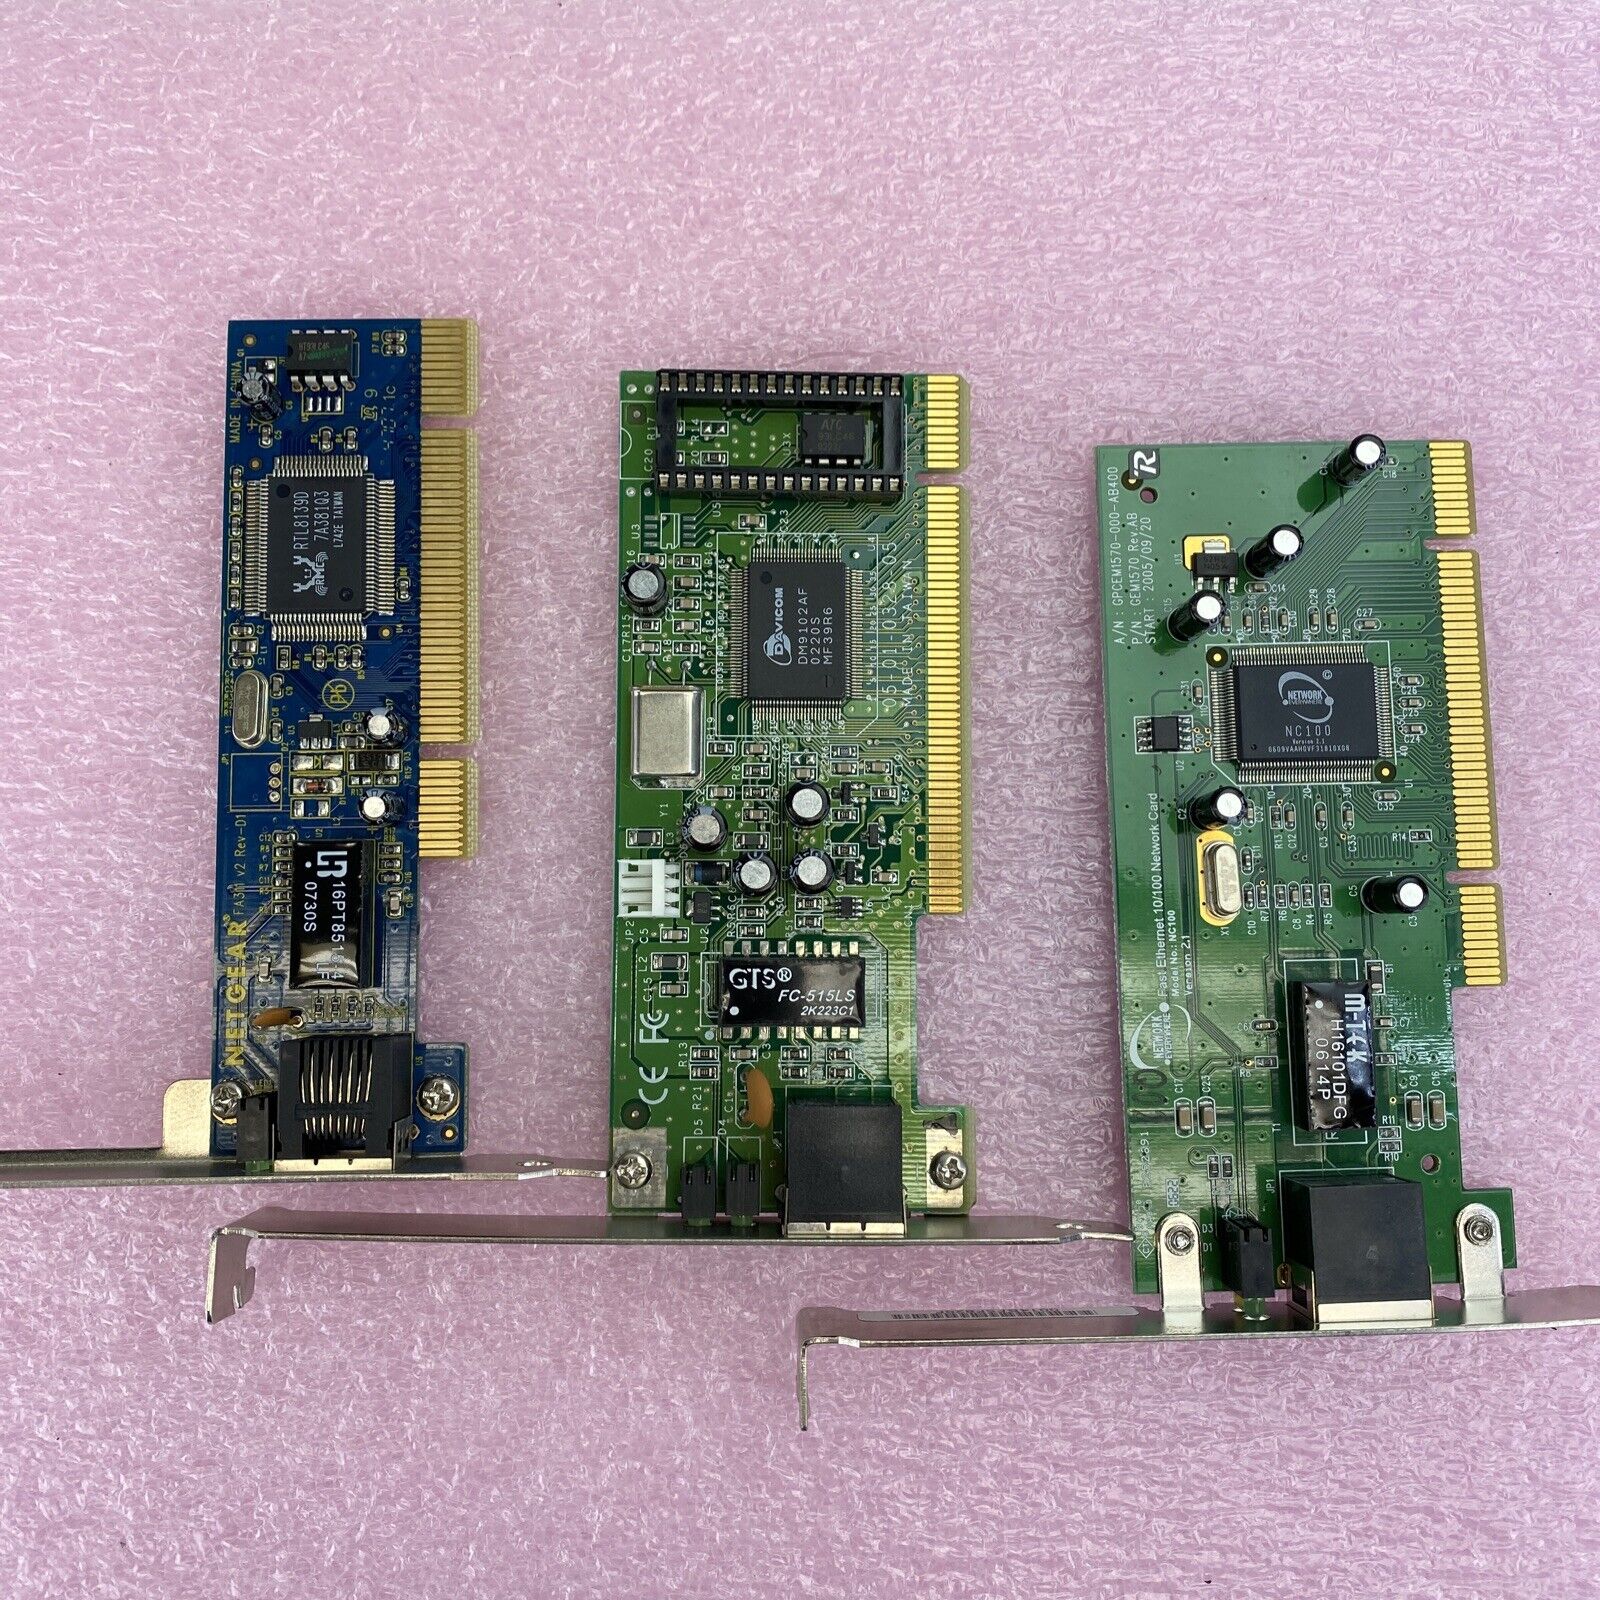 Lot of 3 various Ethernet 10/100 MBps single port network LAN cards